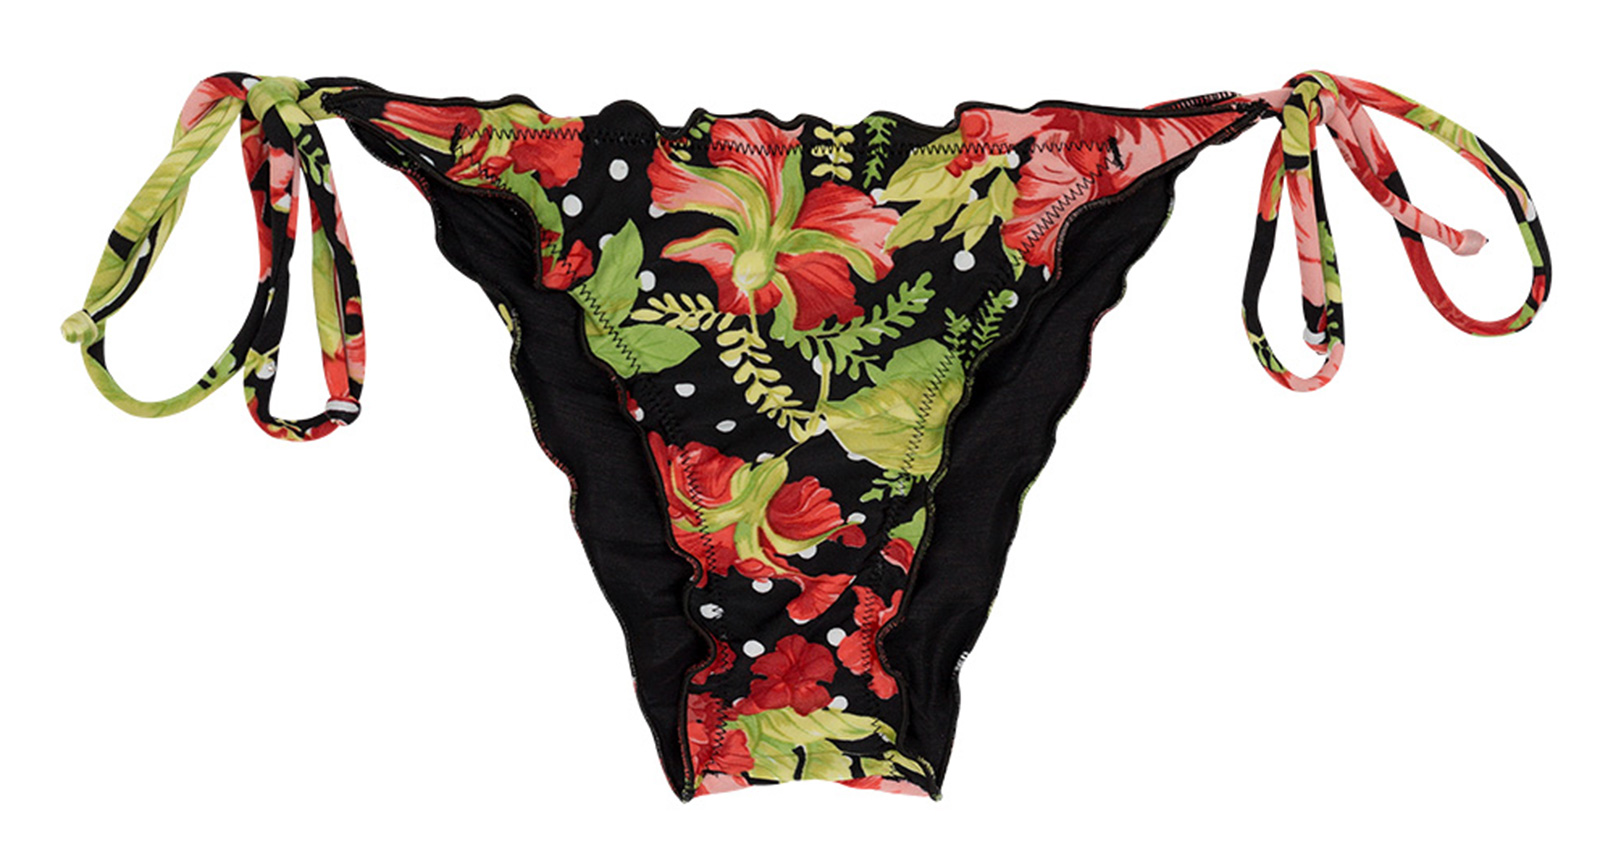 Scrunch Side Tie Bikini Bottom In Flowers And Polka Dot Print Bottom Ilha Bela Frufru Rio De Sol